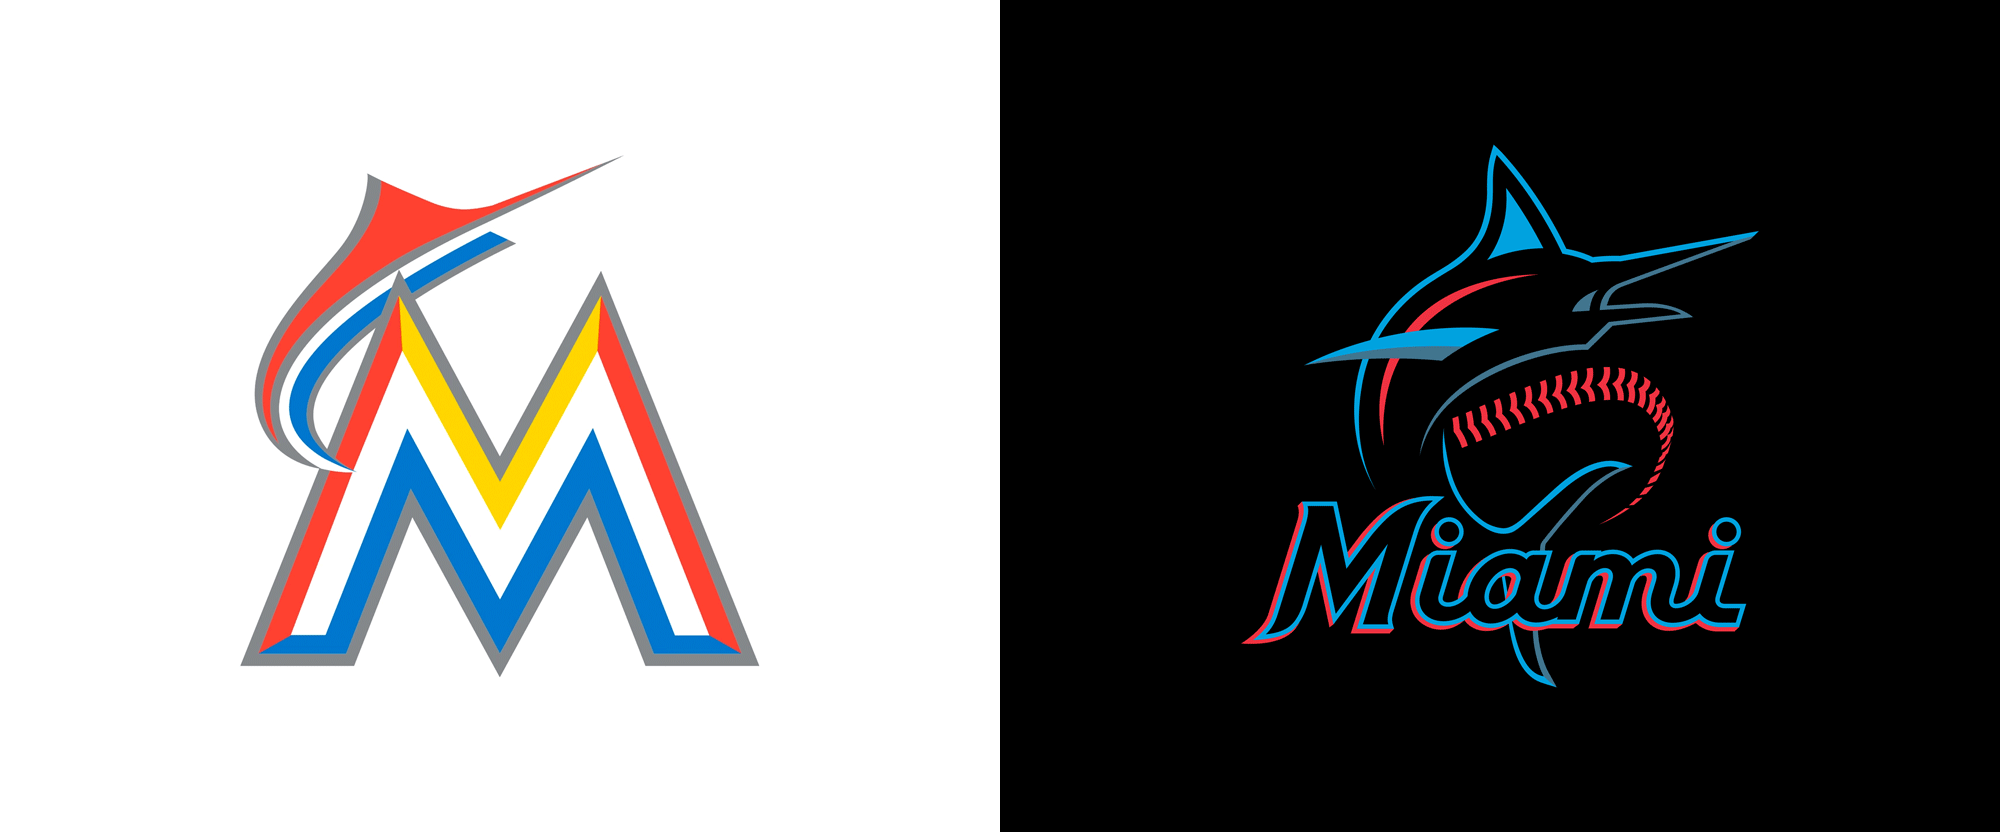 marlins baseball logo